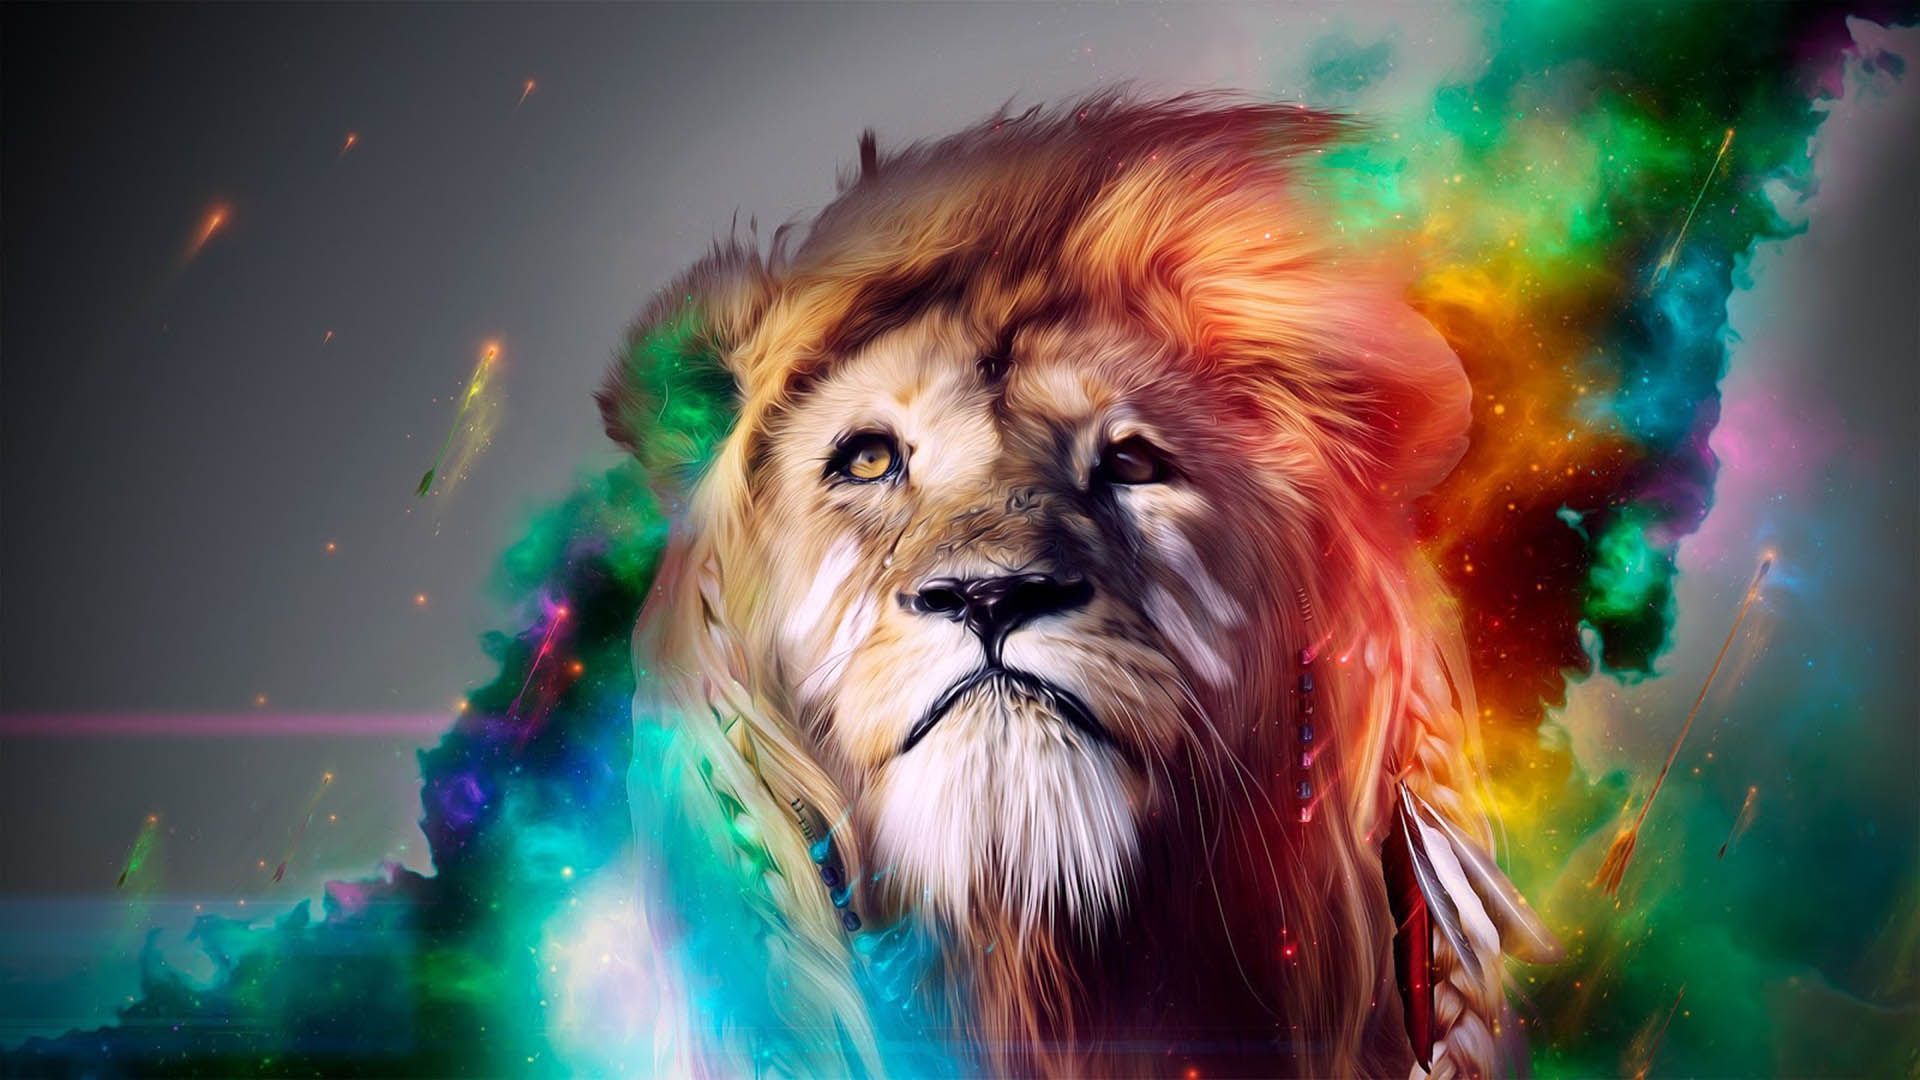 Fondos de pantalla de león de colores - FondosMil